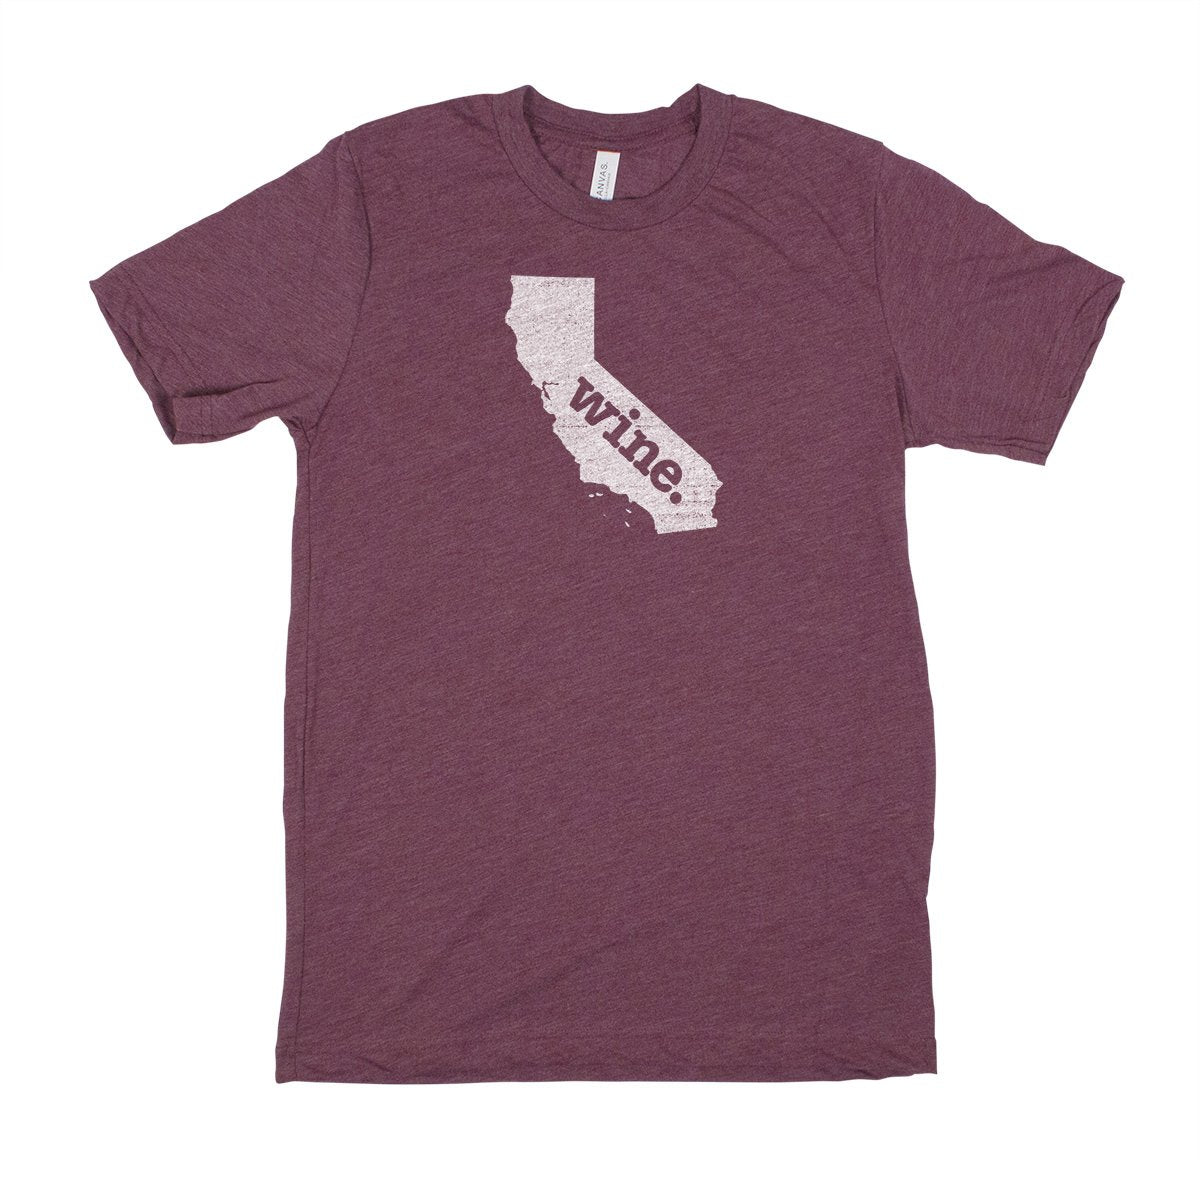 run. Men's Unisex T-Shirt - Connecticut